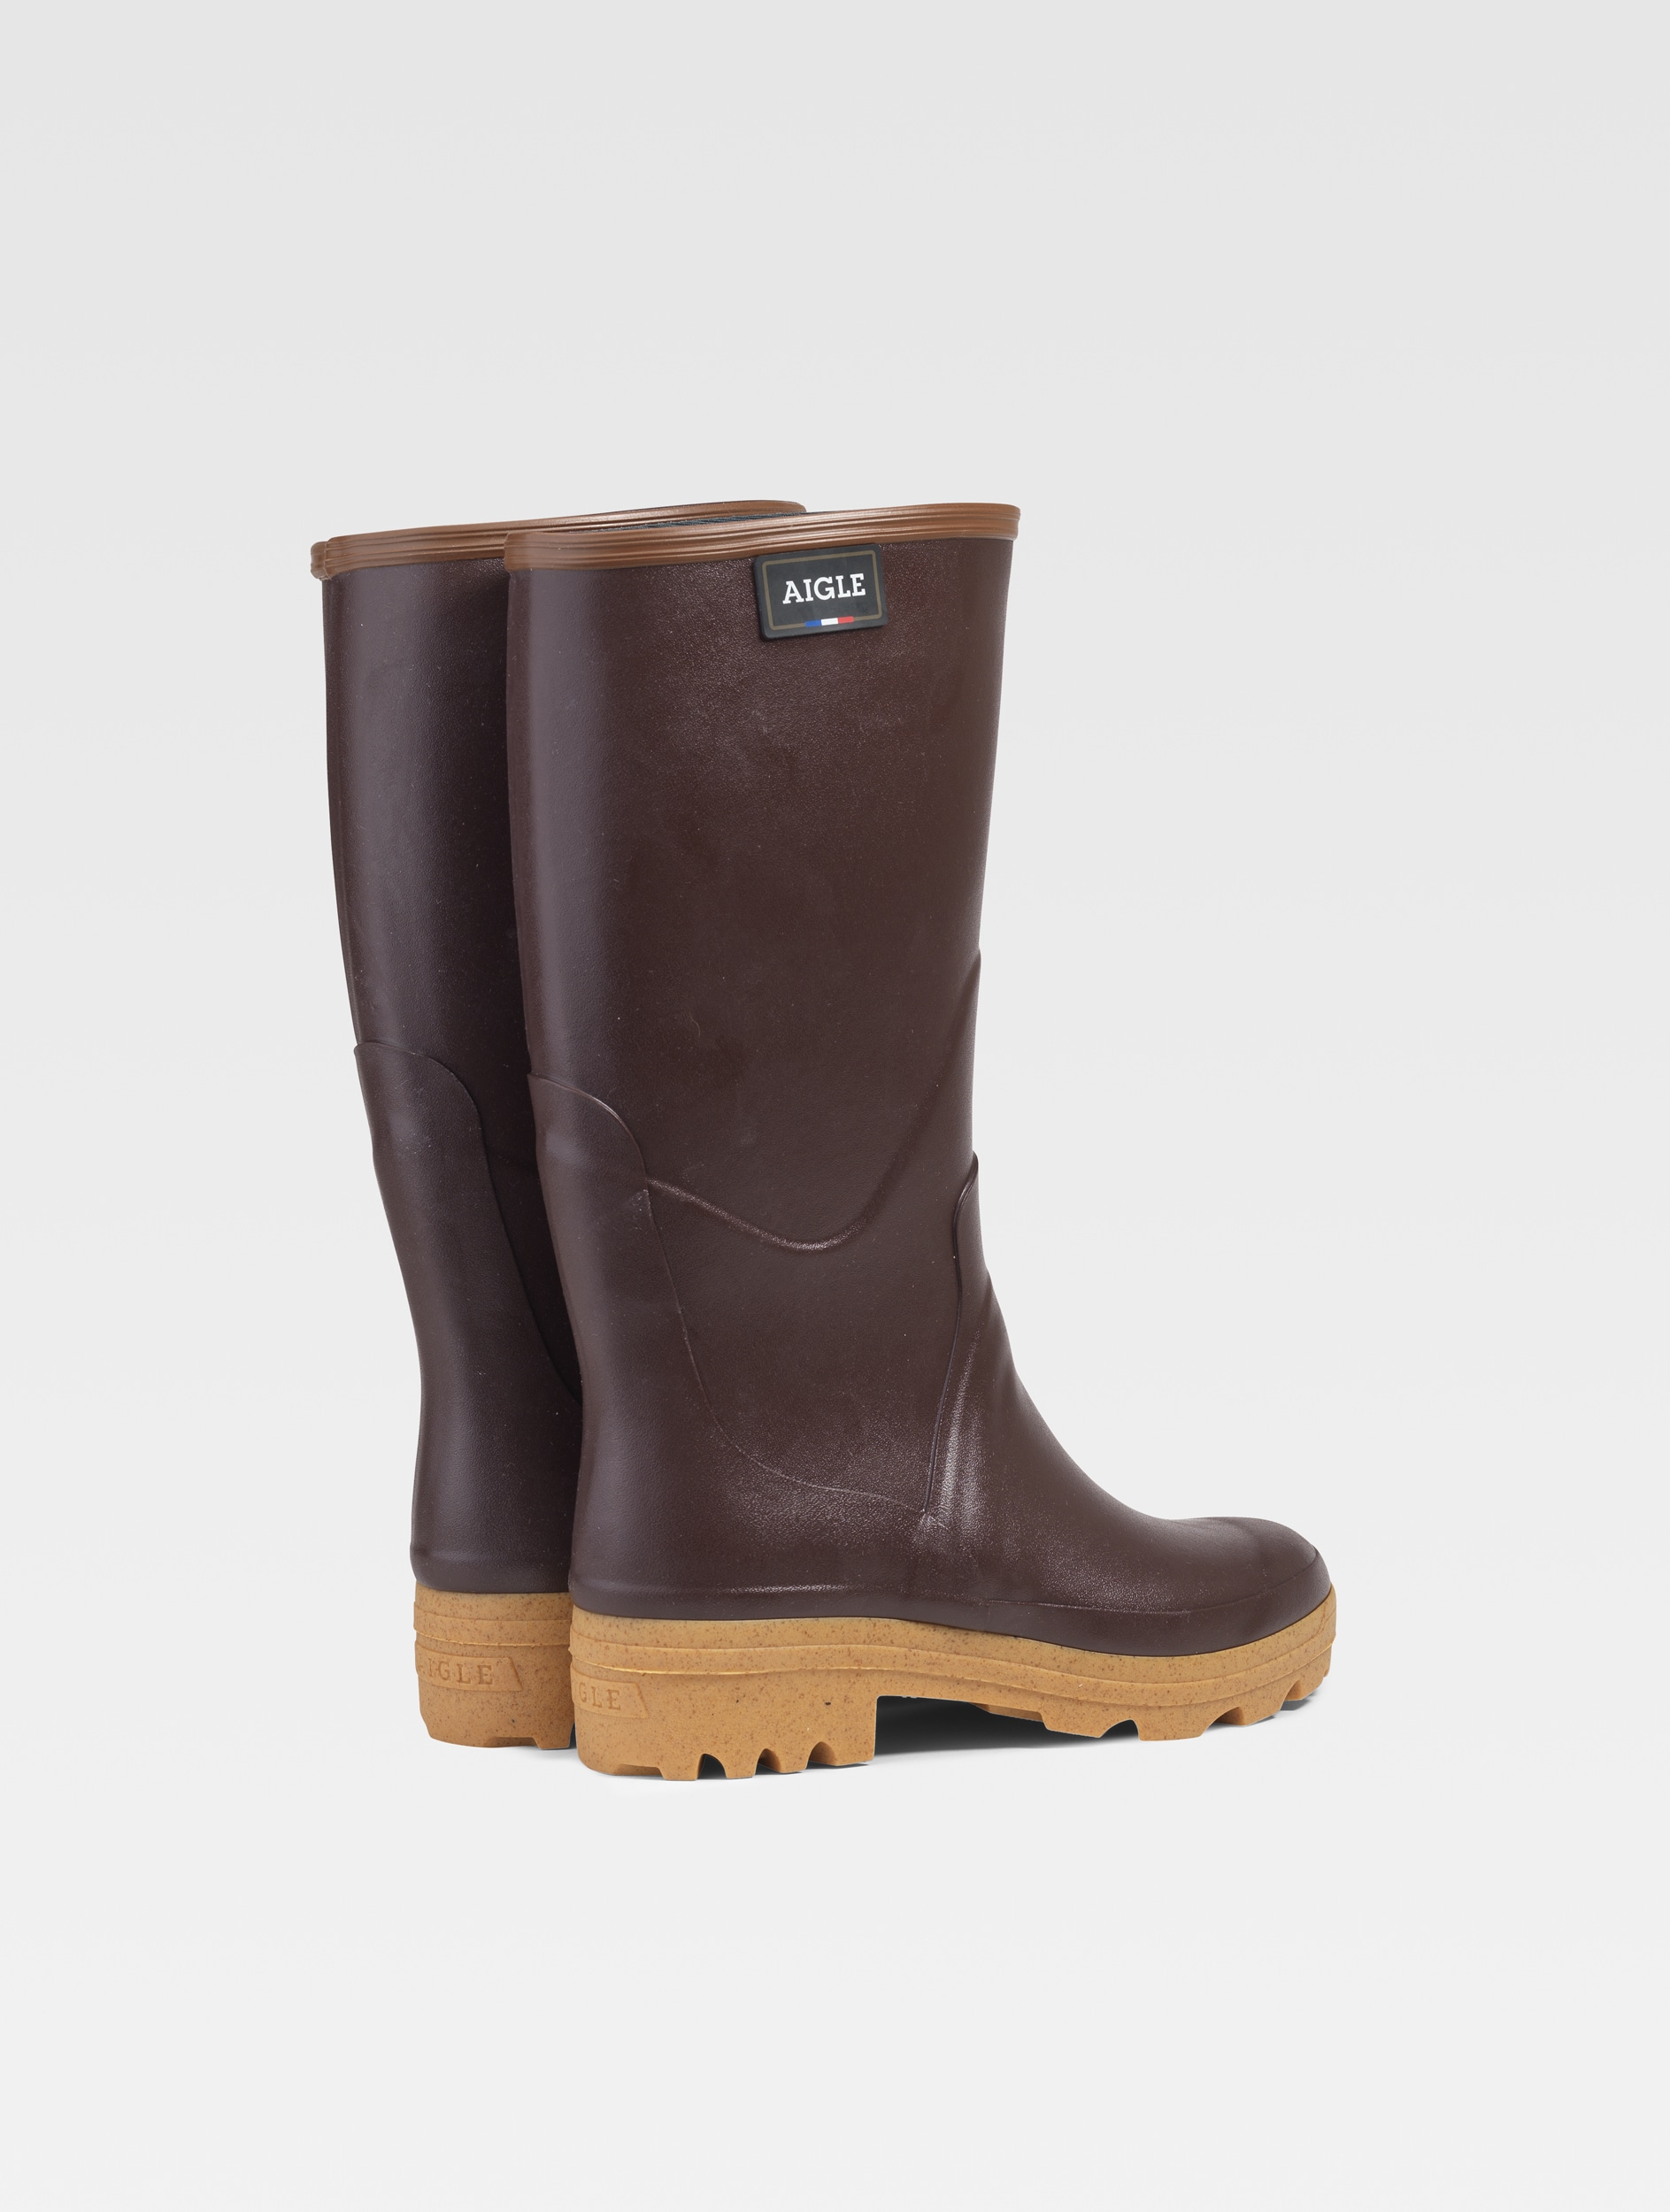 Isaac riem wonder Aigle - Professional boots Made in France Sureau - Chambord pro 2 lady |  AIGLE